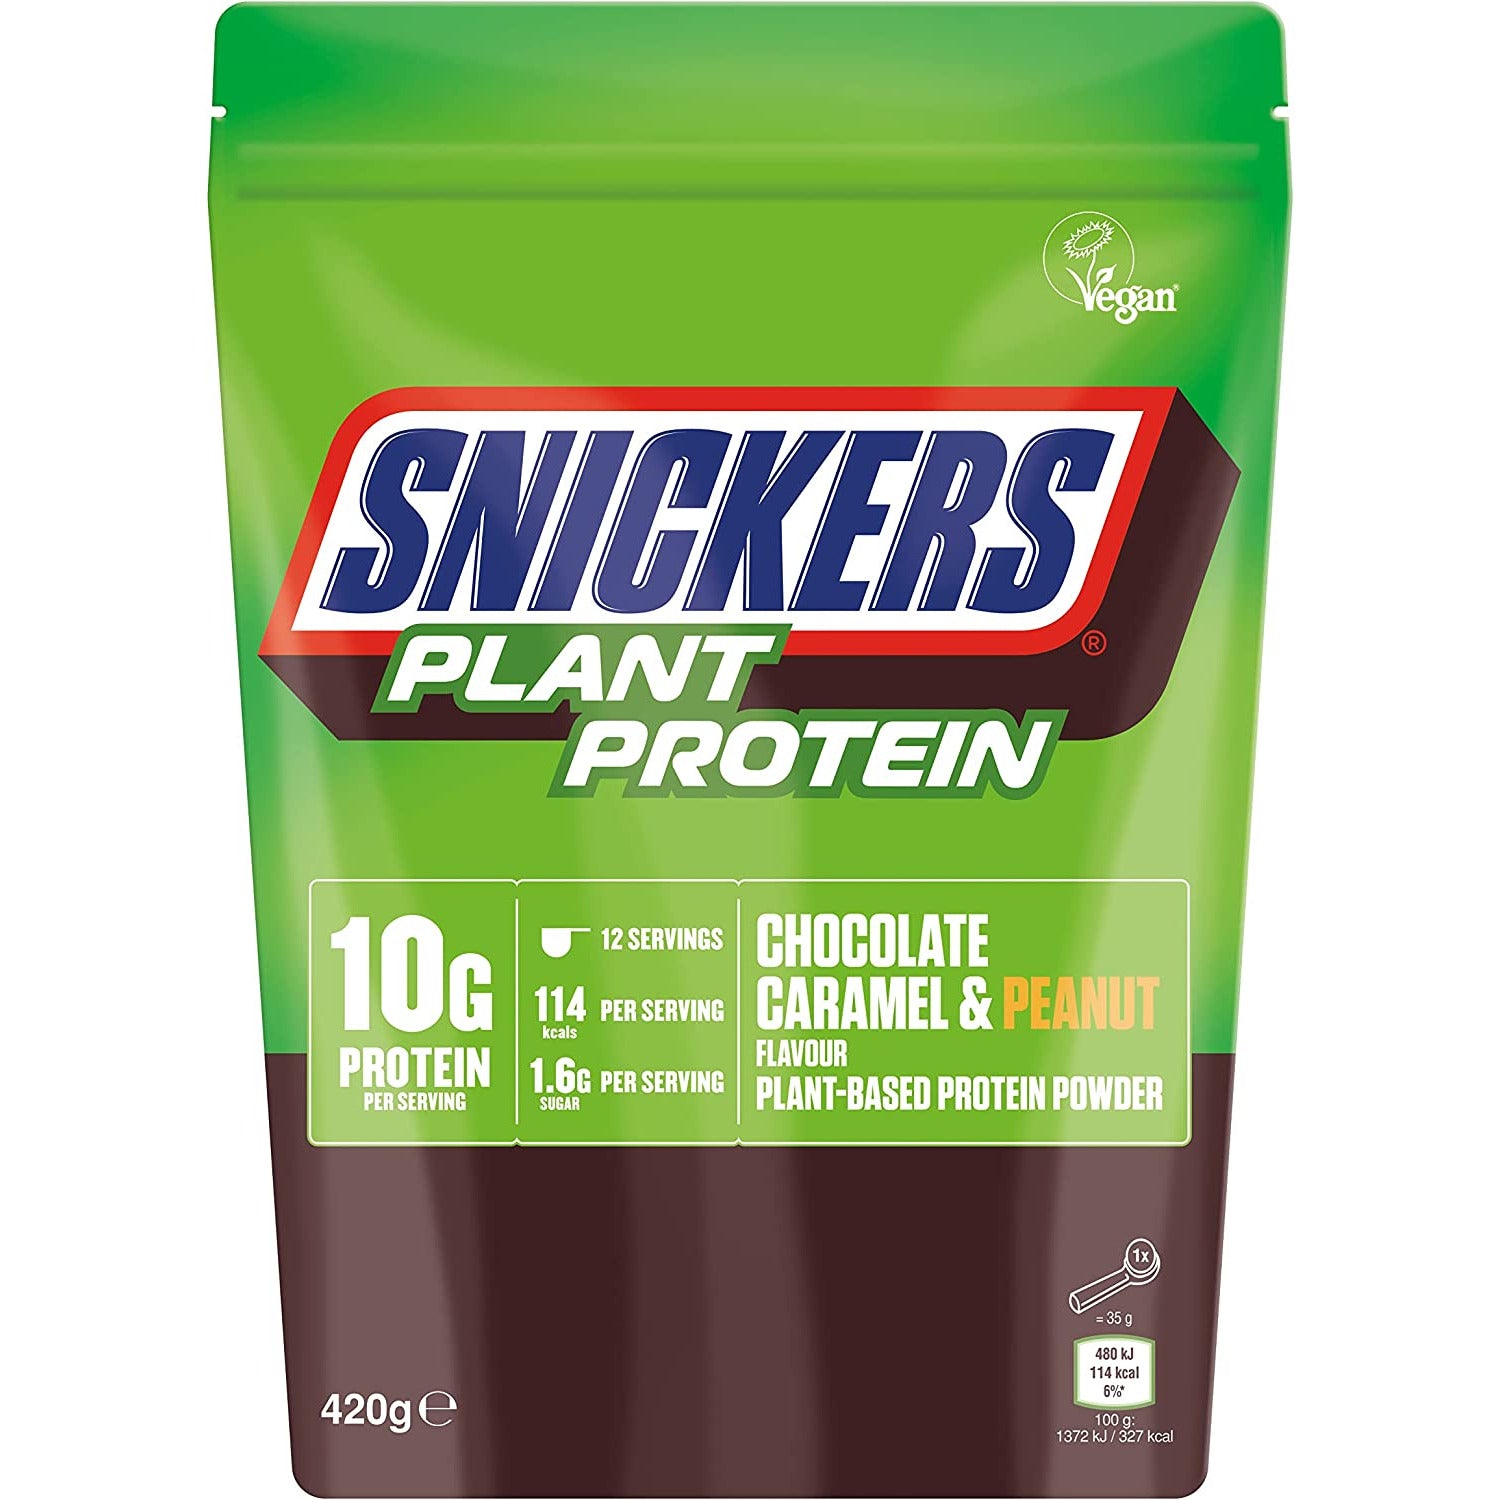 Mars Brand HI PROTEIN VEGAN Protein Powder (420g) mars-hi-protein-plant-based-protein-powder-12-servings Vegan Protein Snickers (Choc Caramel & Peanut) BEST BY SEPT 27, 2023 Mars Brand